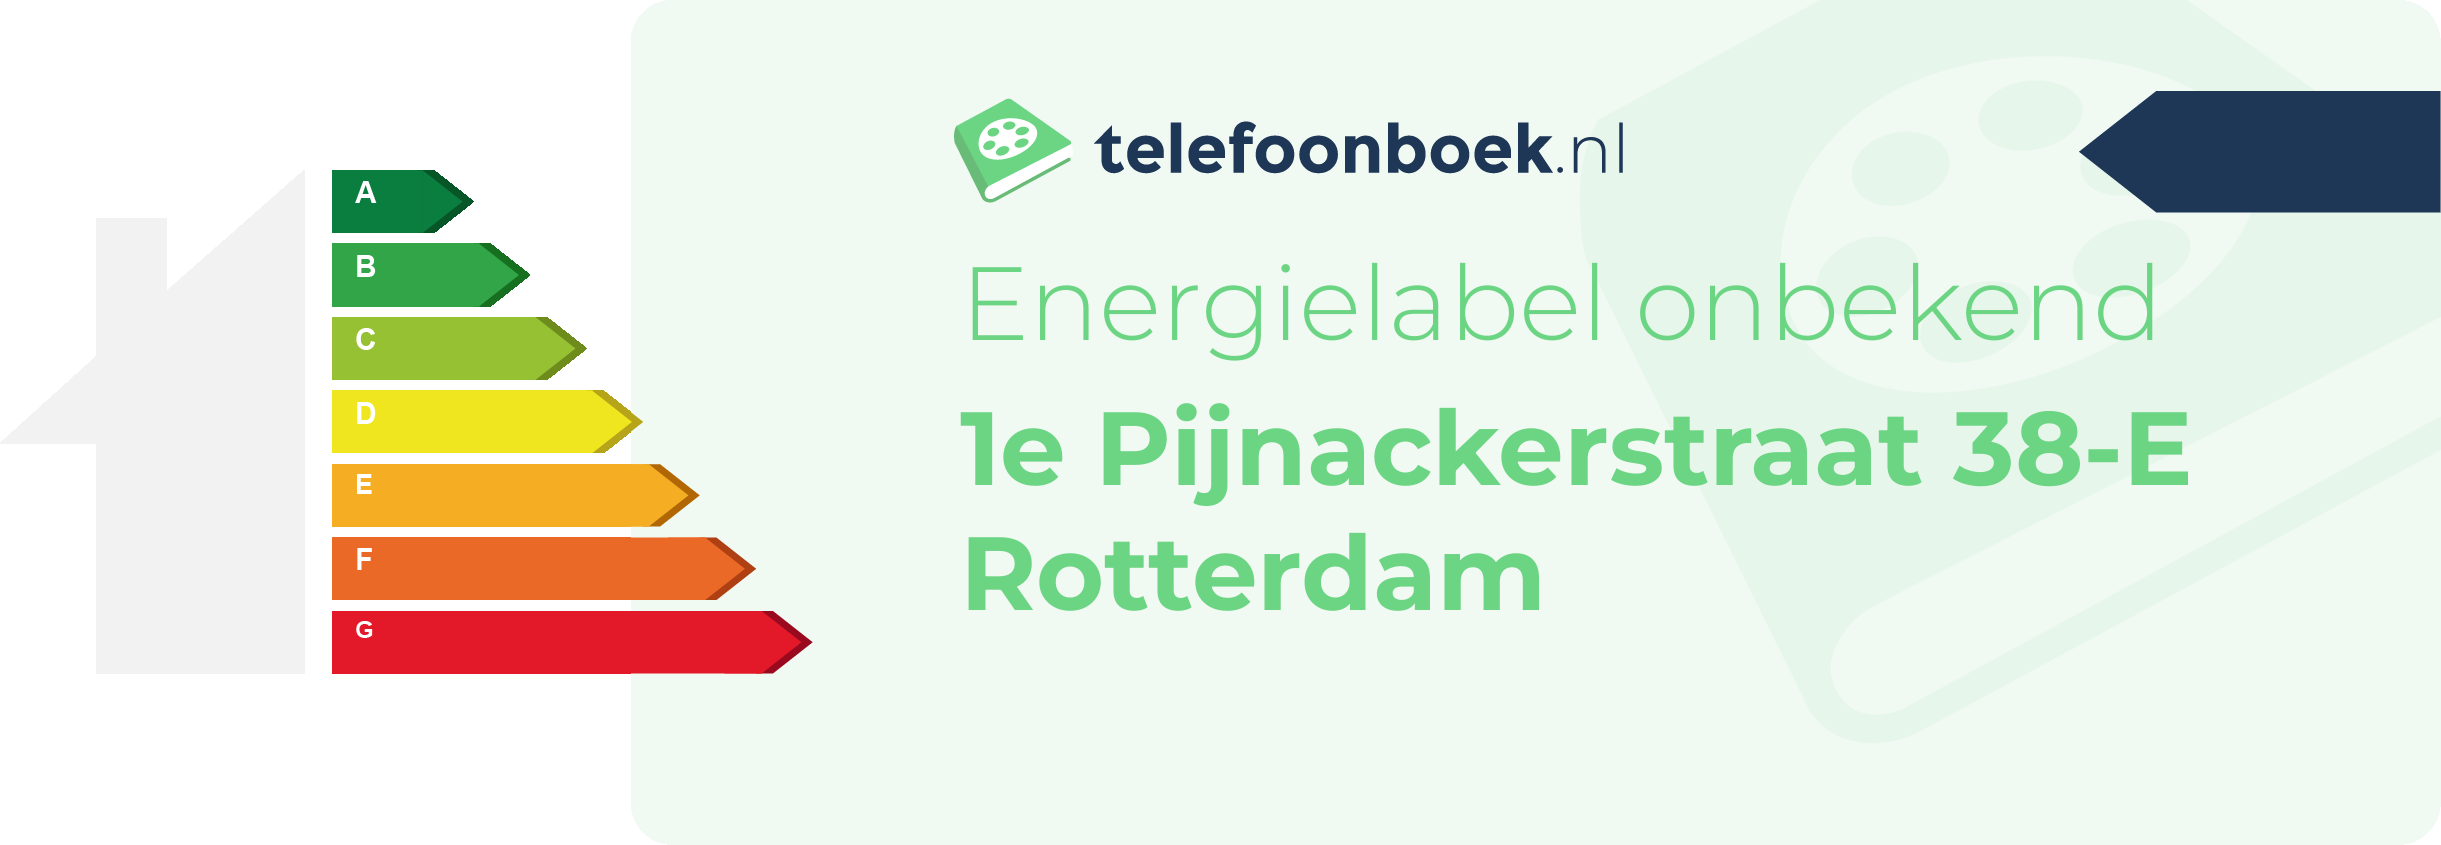 Energielabel 1e Pijnackerstraat 38-E Rotterdam